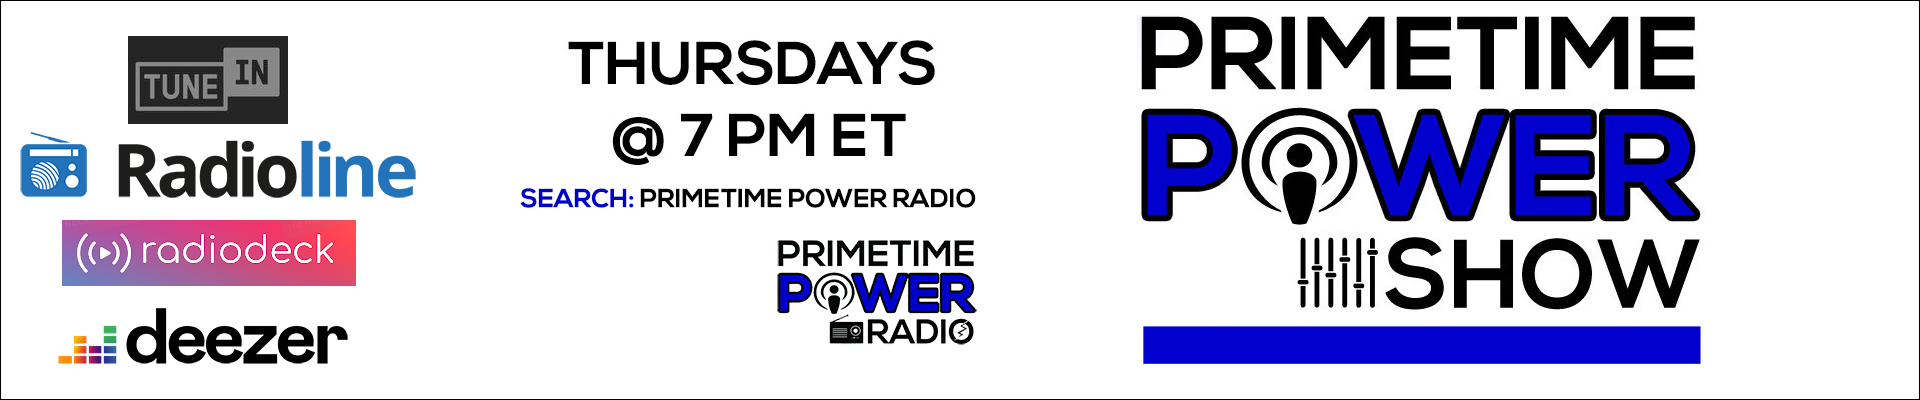 Primetime Power Show - Radio options